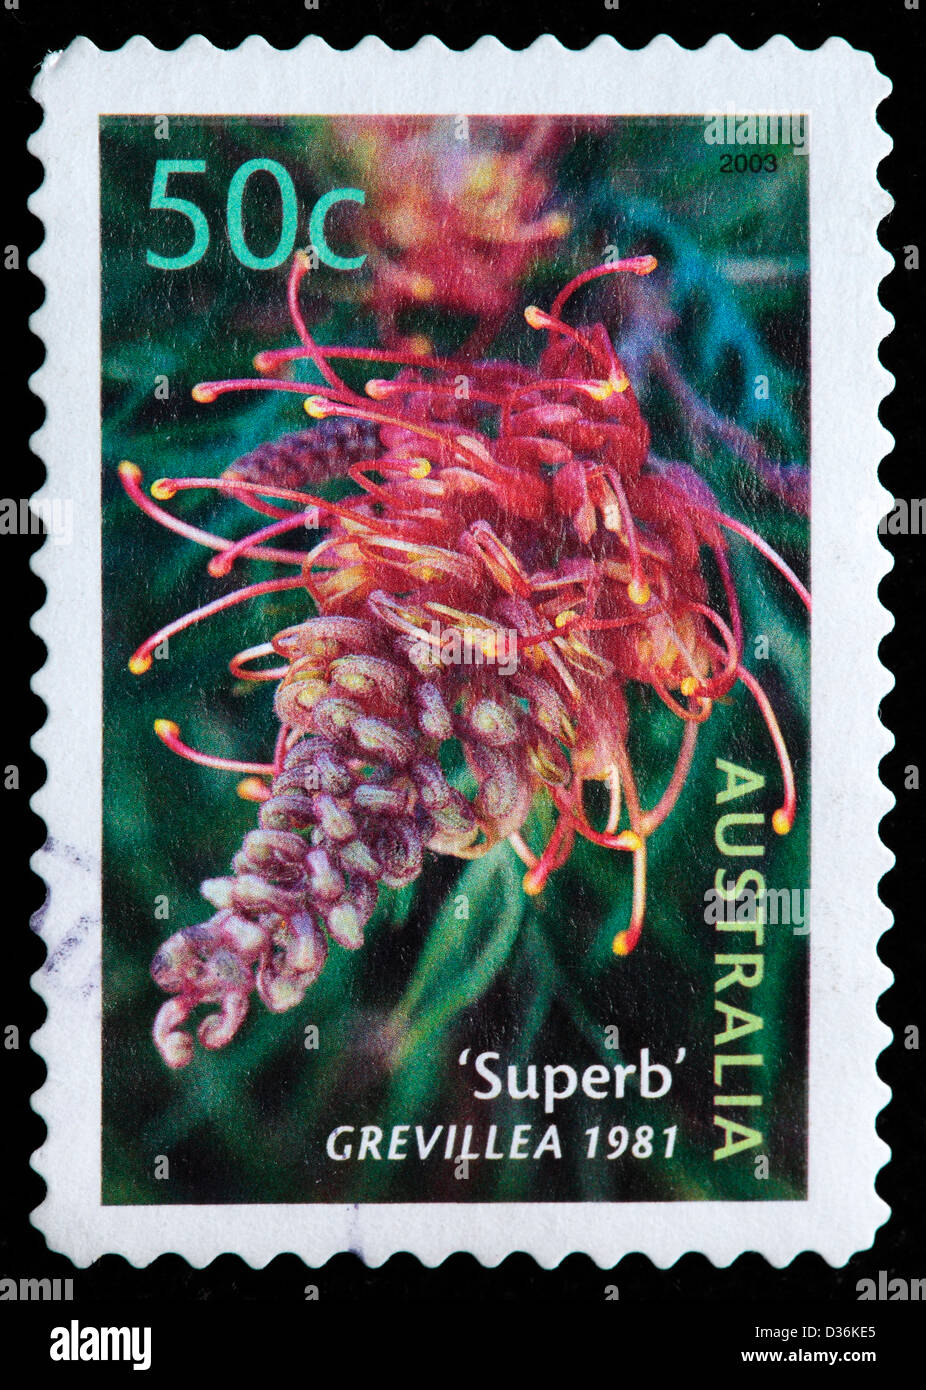 Superb Grevillea, postage stamp, Australia, 2003 Stock Photo